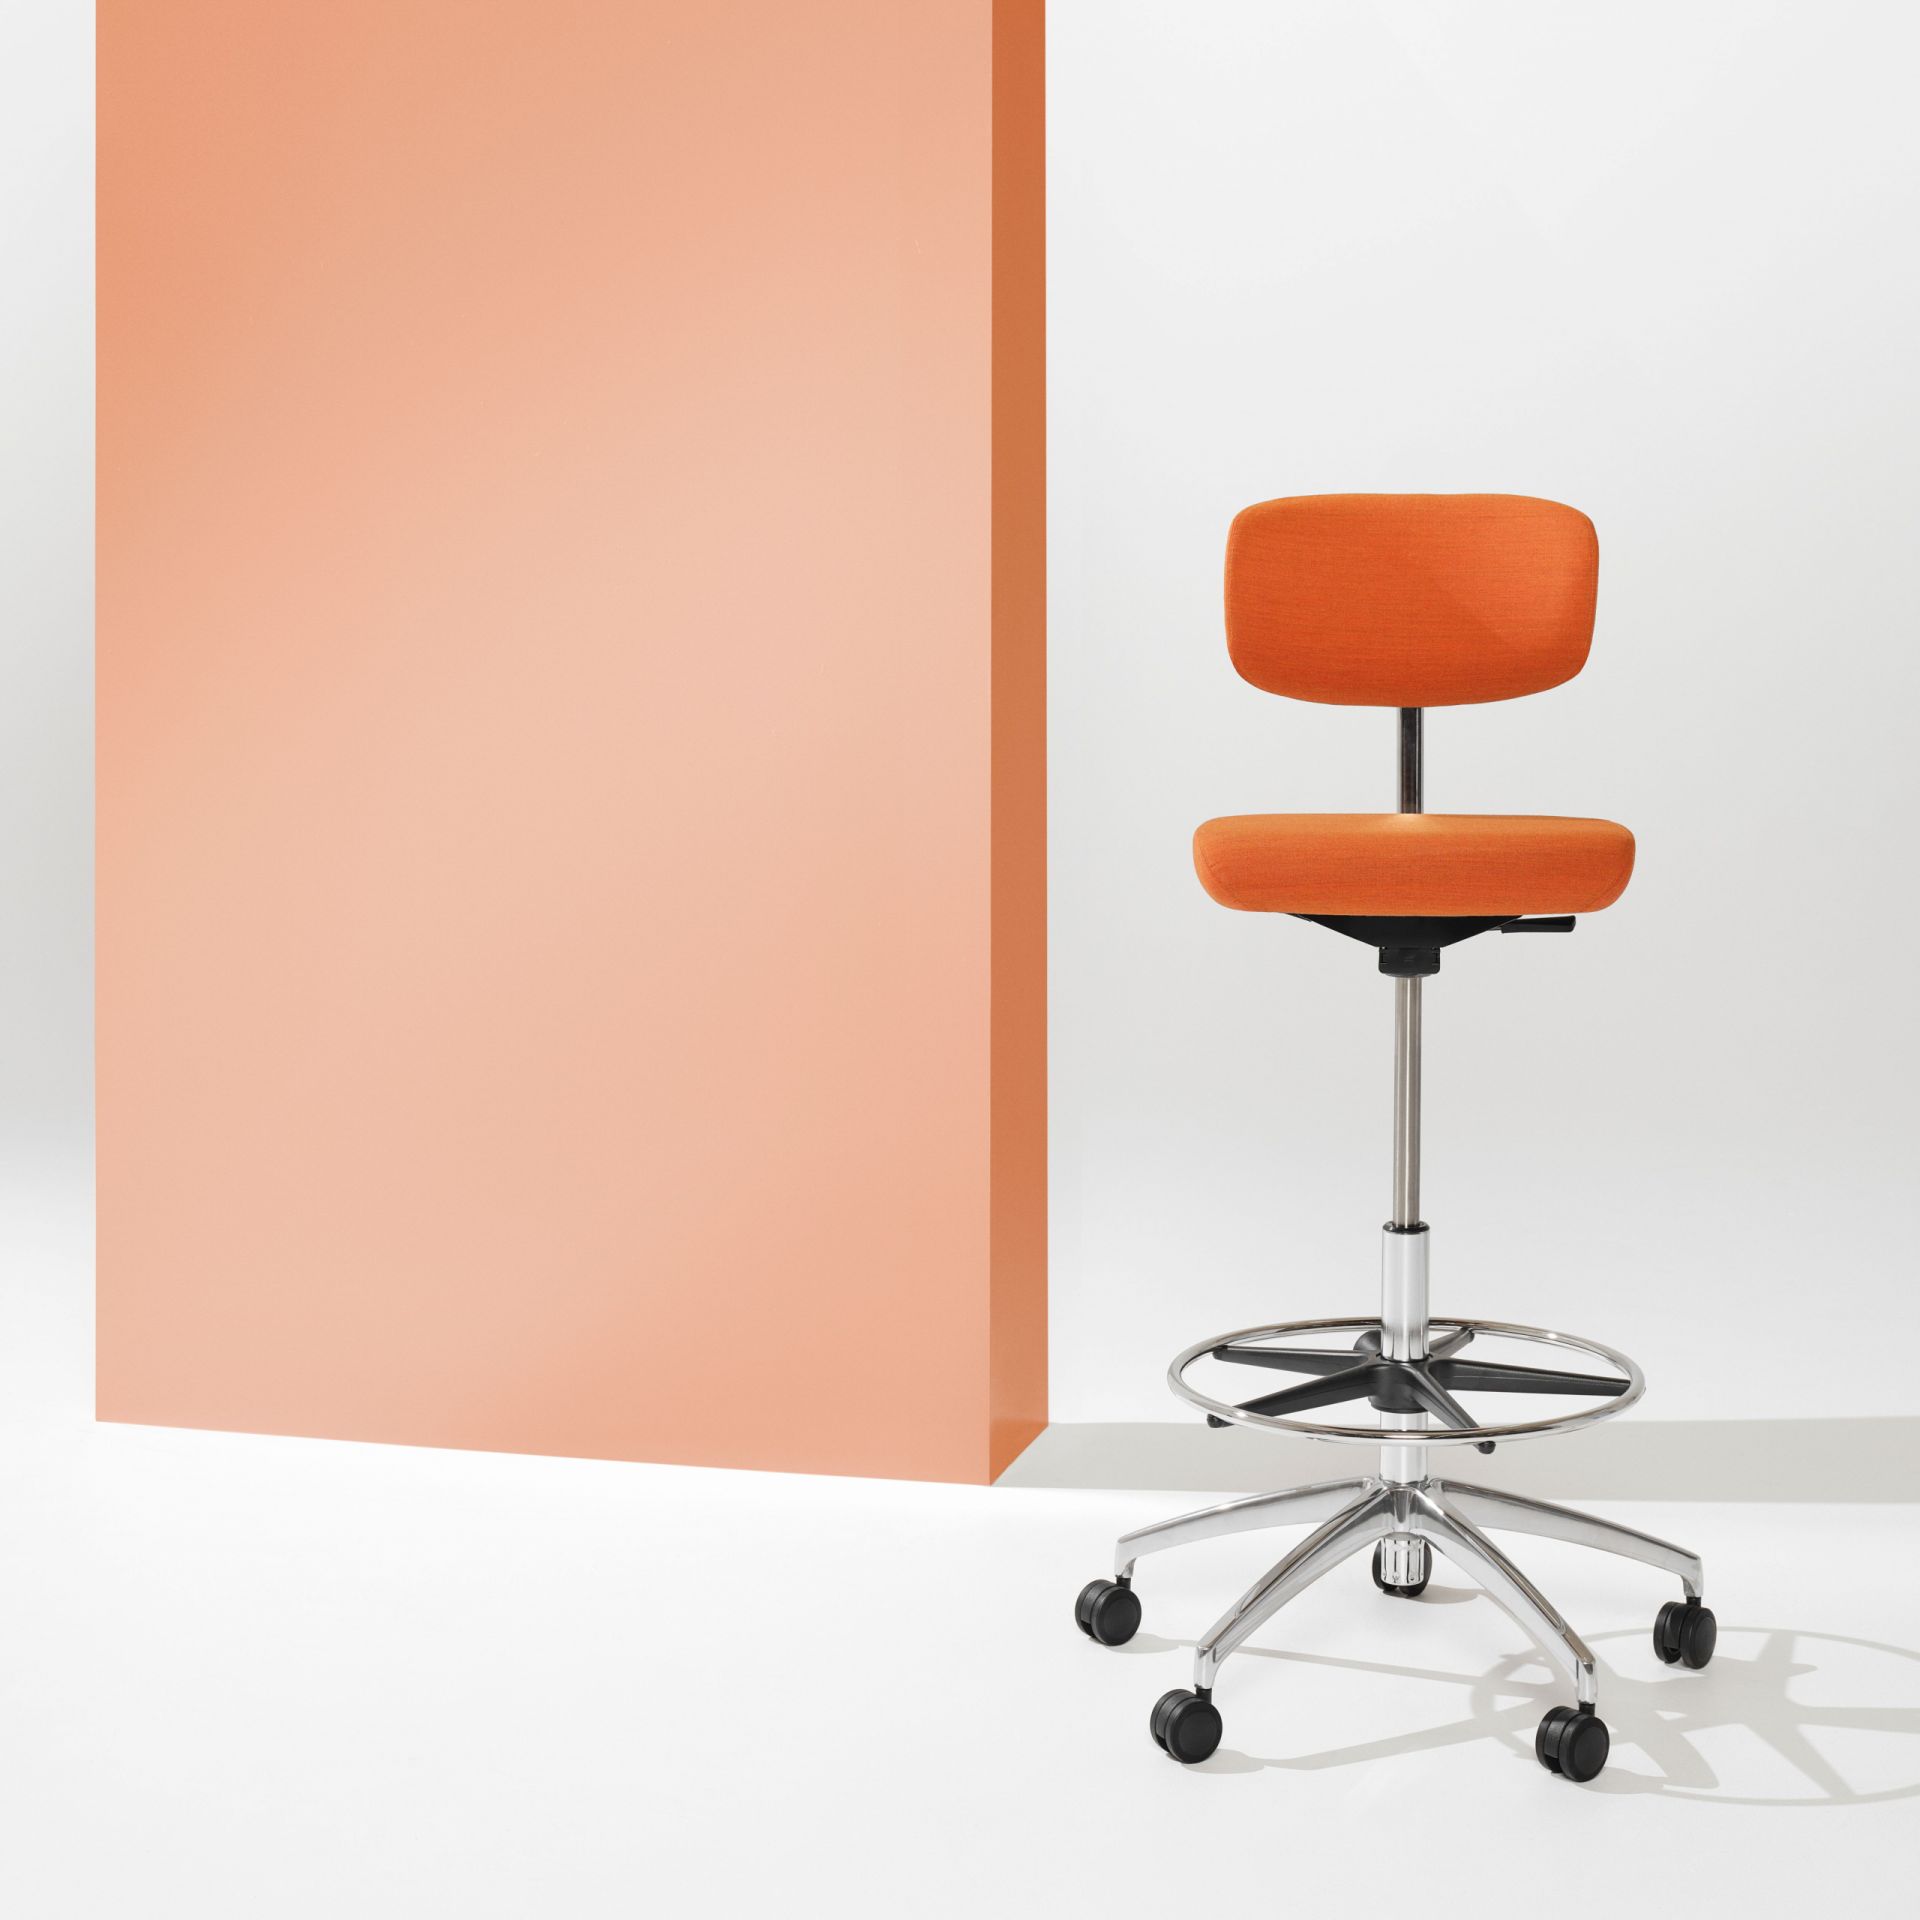 Savo Studio Studio hög stol produktbild 2